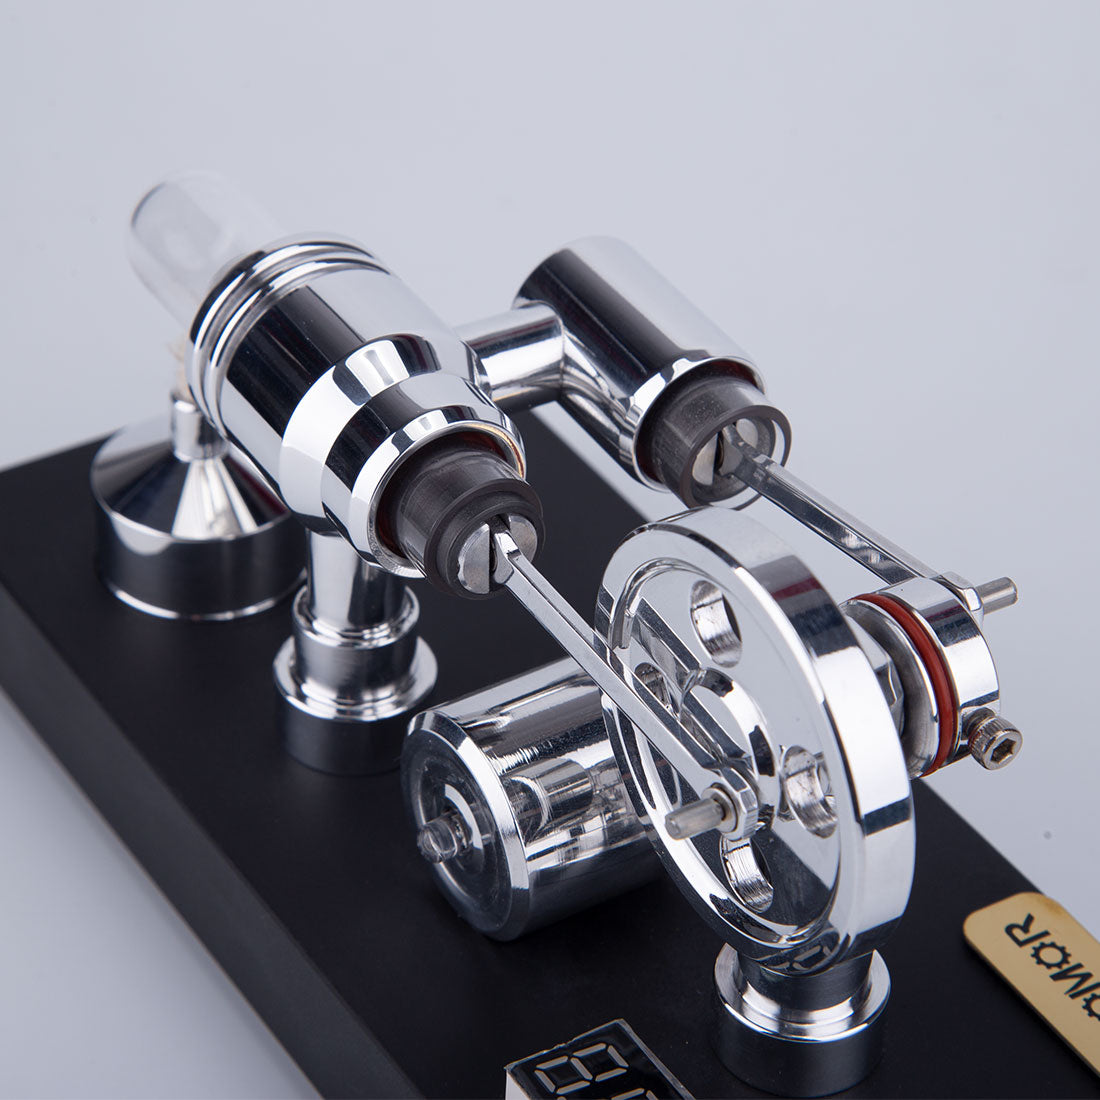 ENJOMOR Metal Gamma Hot-air Stirling Engine Model with Bulb Educational Toys Gifts enginediyshop